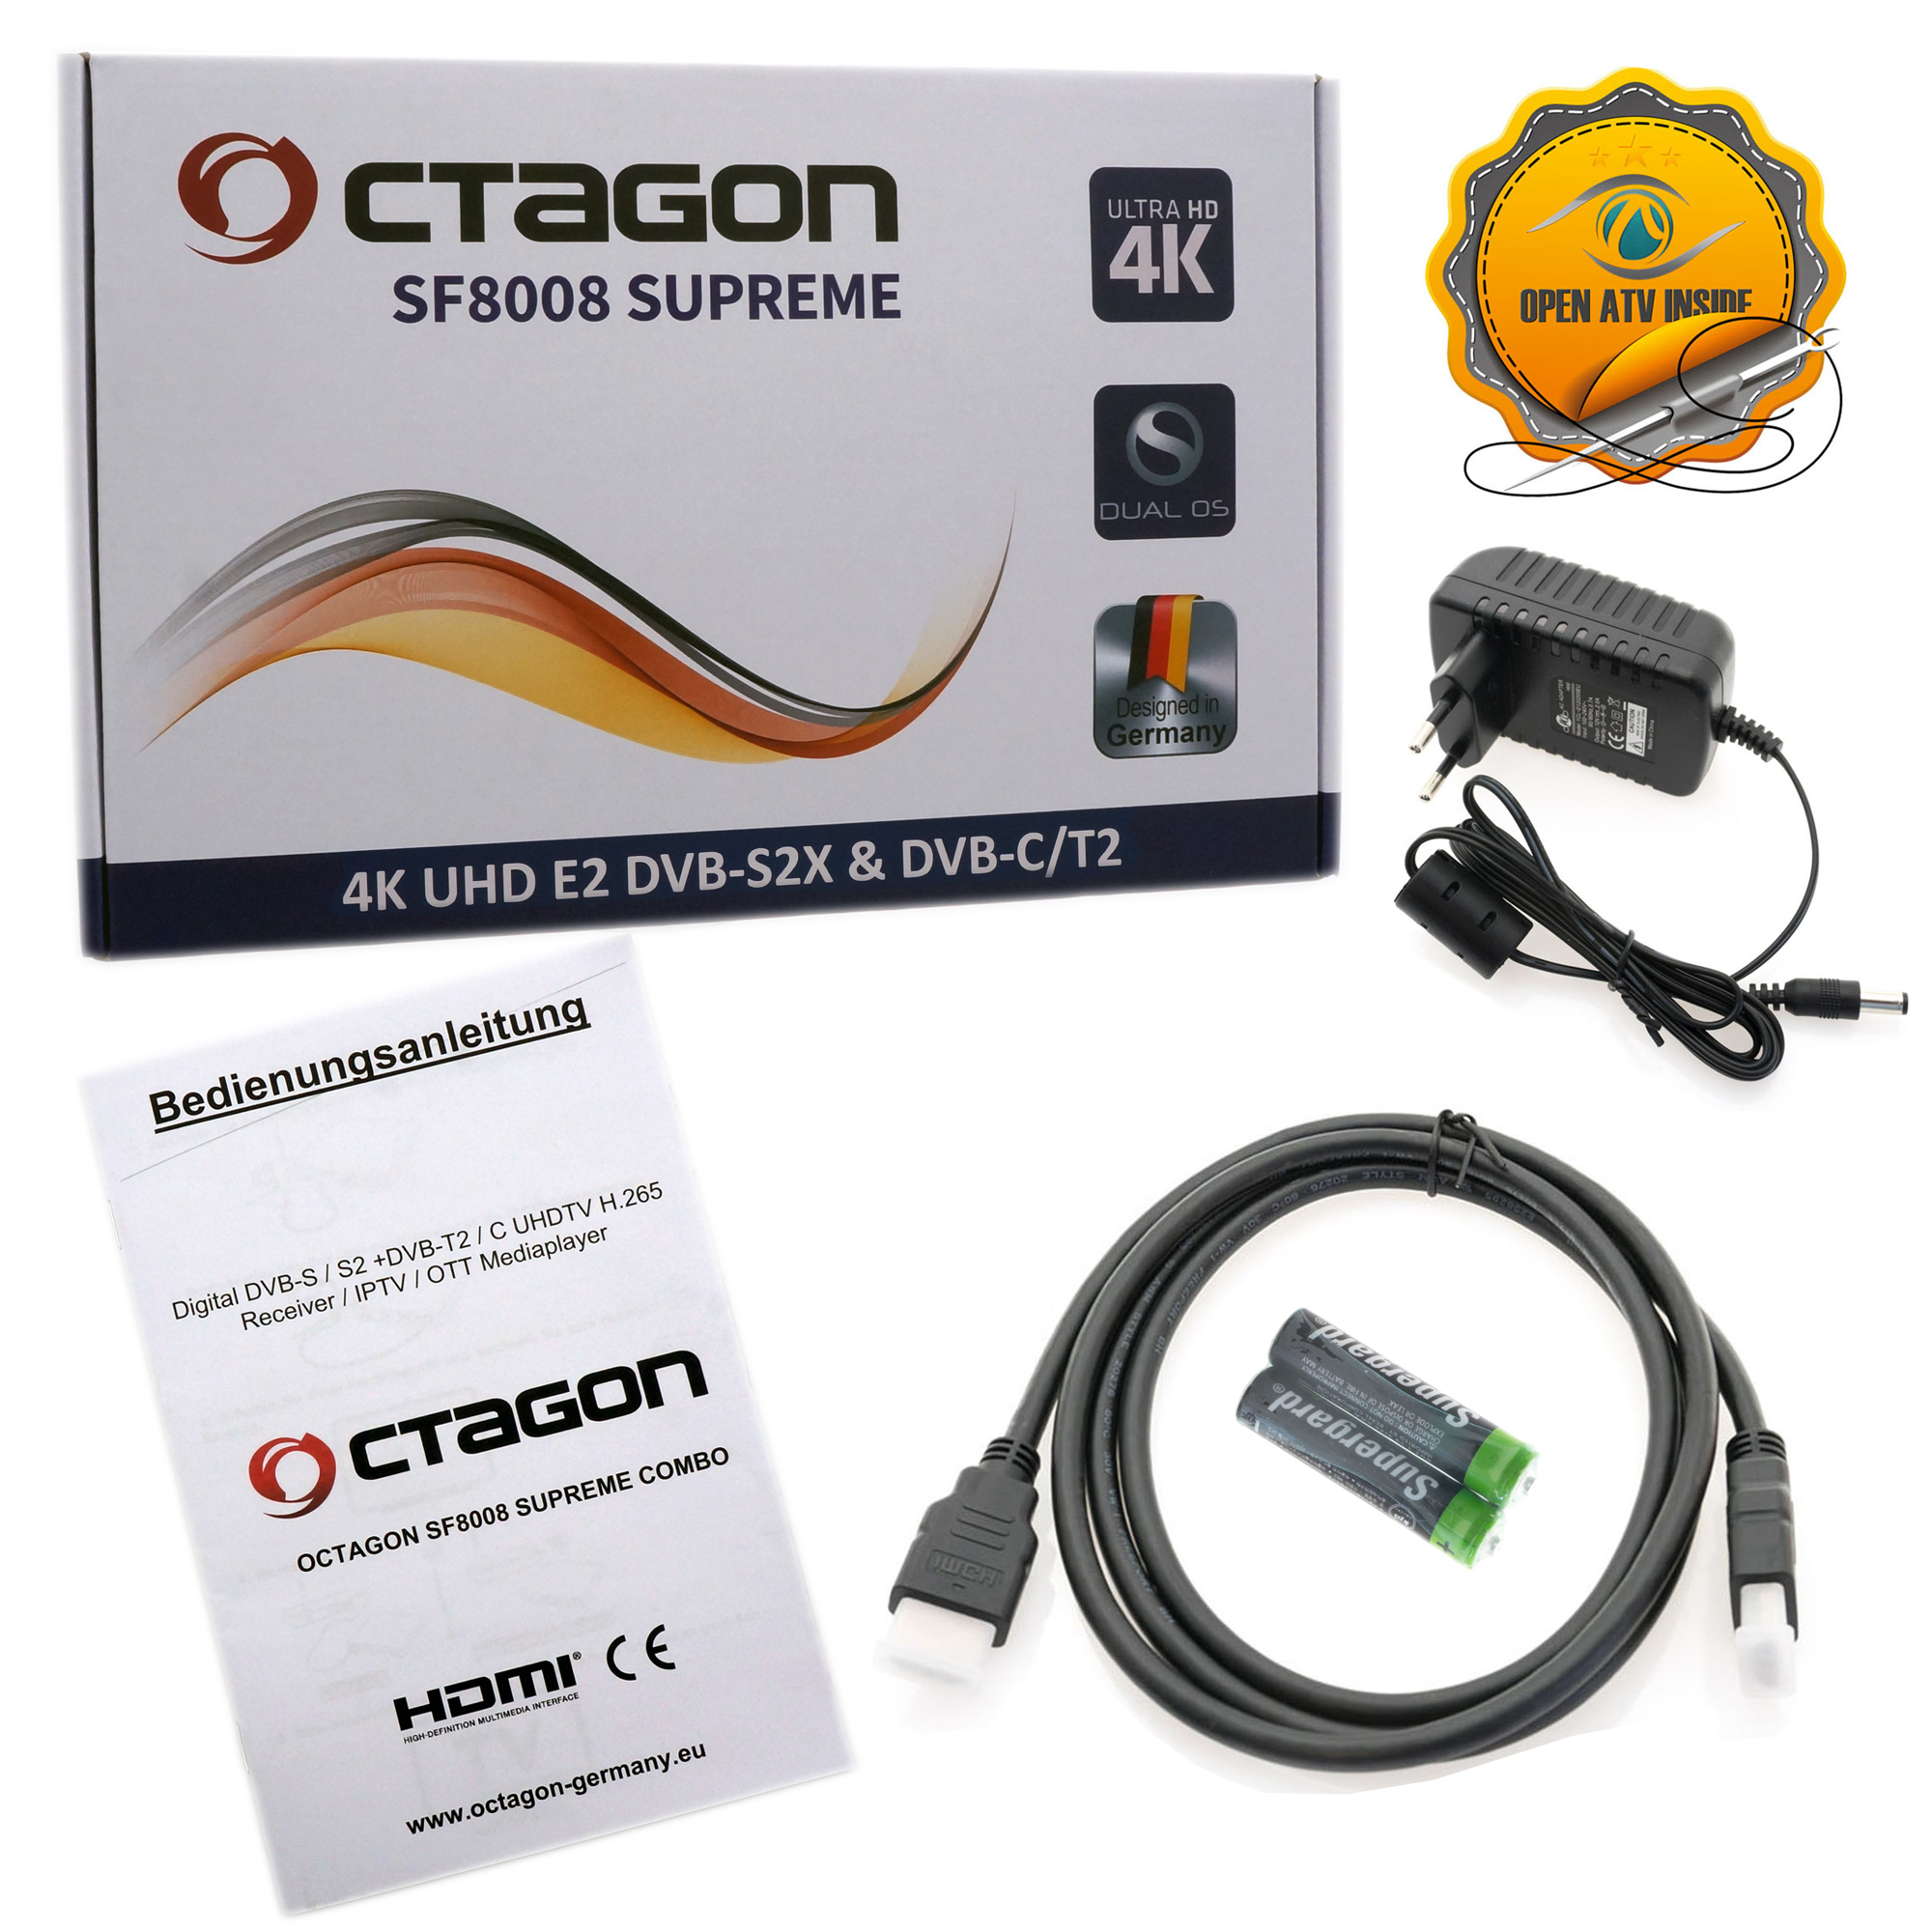 SSD OCTAGON 4K 500GB SF8008 Receiver Tuner, Combo Sat UHD DVB-C/T2 & UHD 4K (PVR-Funktion, Twin SUPREME DVB-S2X E2 mit Receiver Schwarz) M.2 Linux